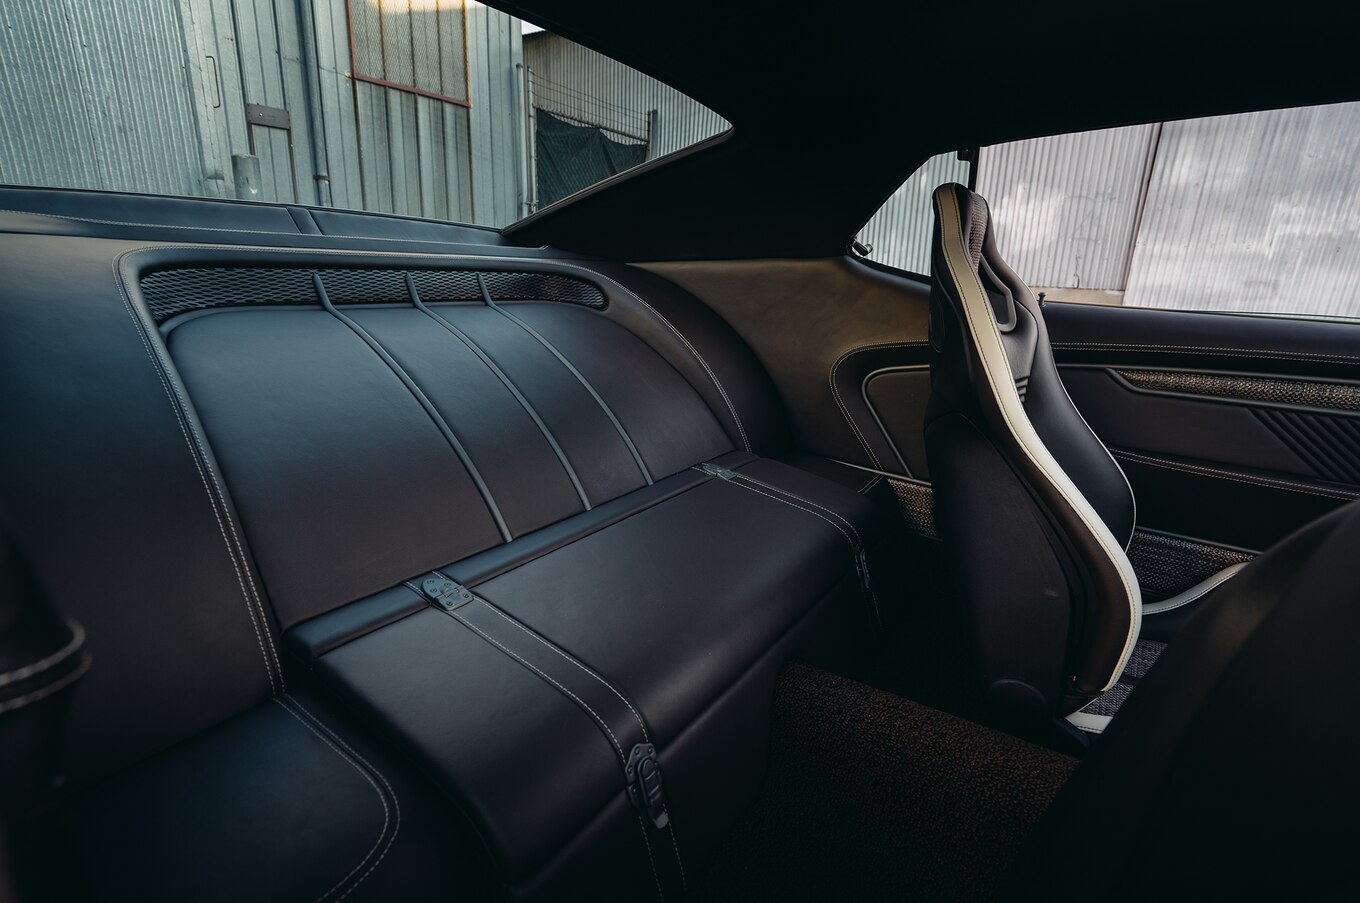 1970-Ford-Mustang-Boss-302-by-SpeedKore-and-Robert-Downey-Jr-rear-interior.jpg